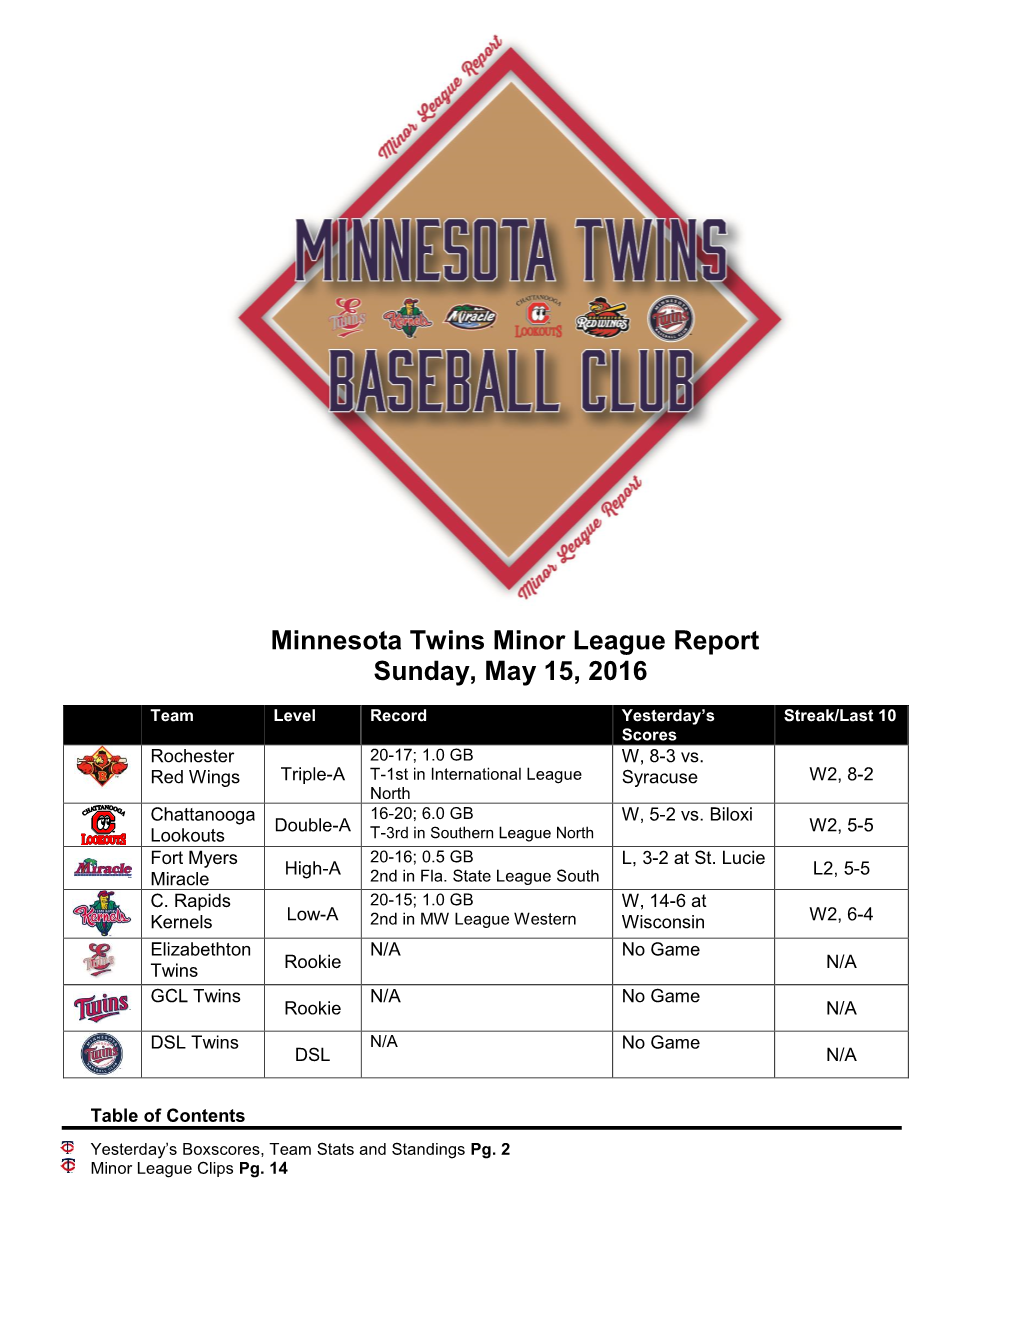 Minnesota Twins Minor League Report Sunday, May 15, 2016